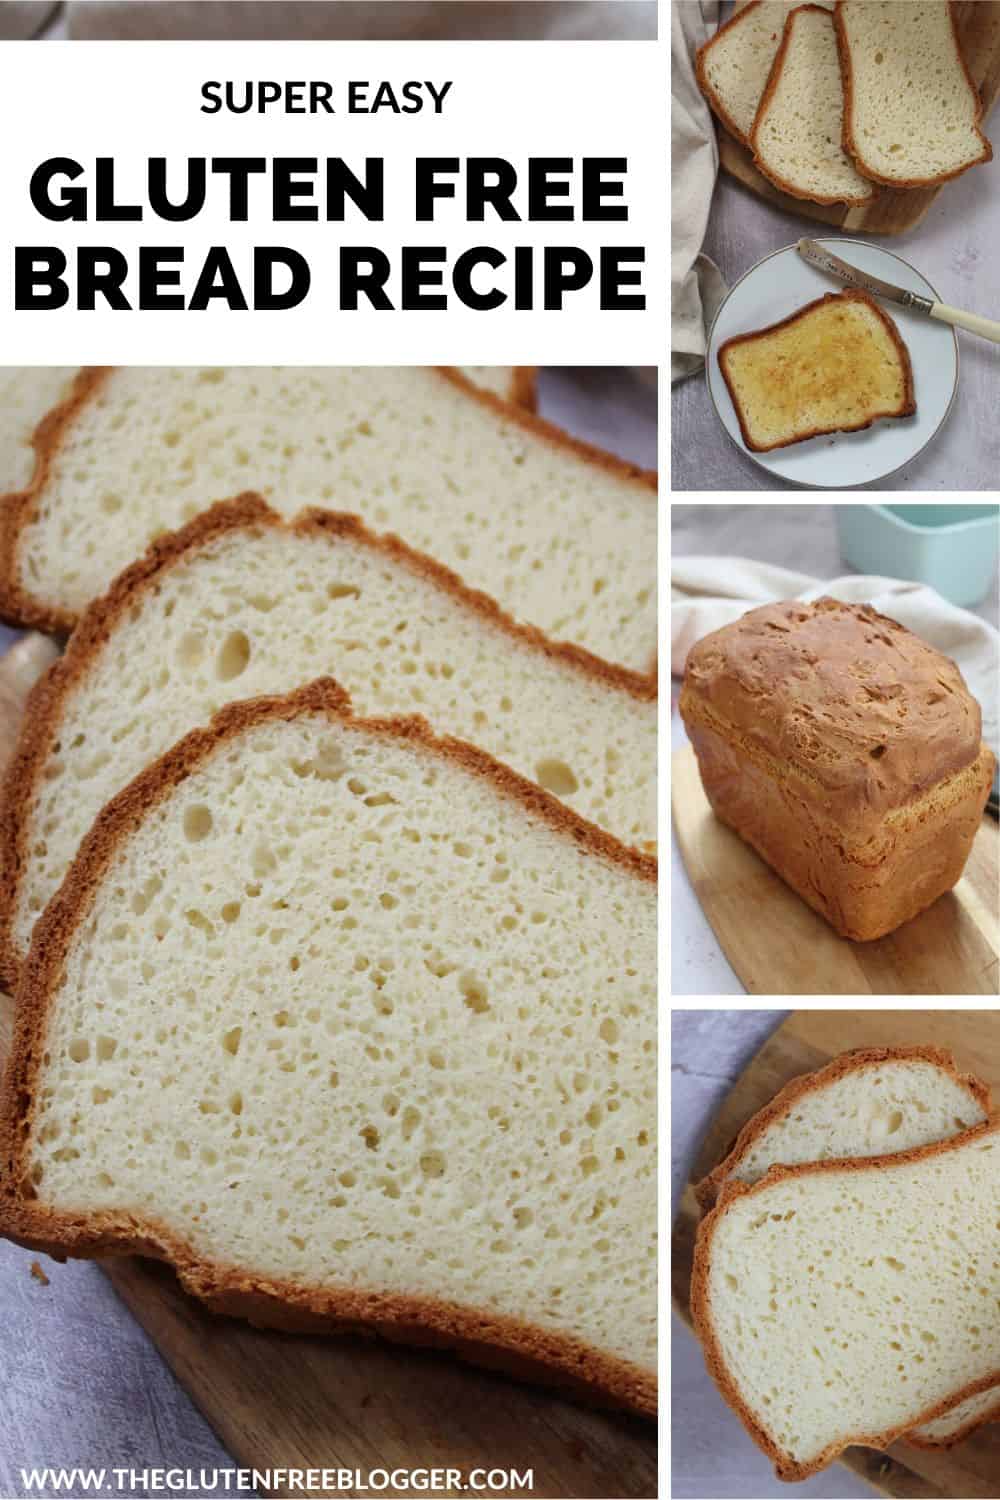 https://www.theglutenfreeblogger.com/wp-content/uploads/2020/04/easy-gluten-free-bread-recipe-basic-baking-at-home-dairy-free-.jpg